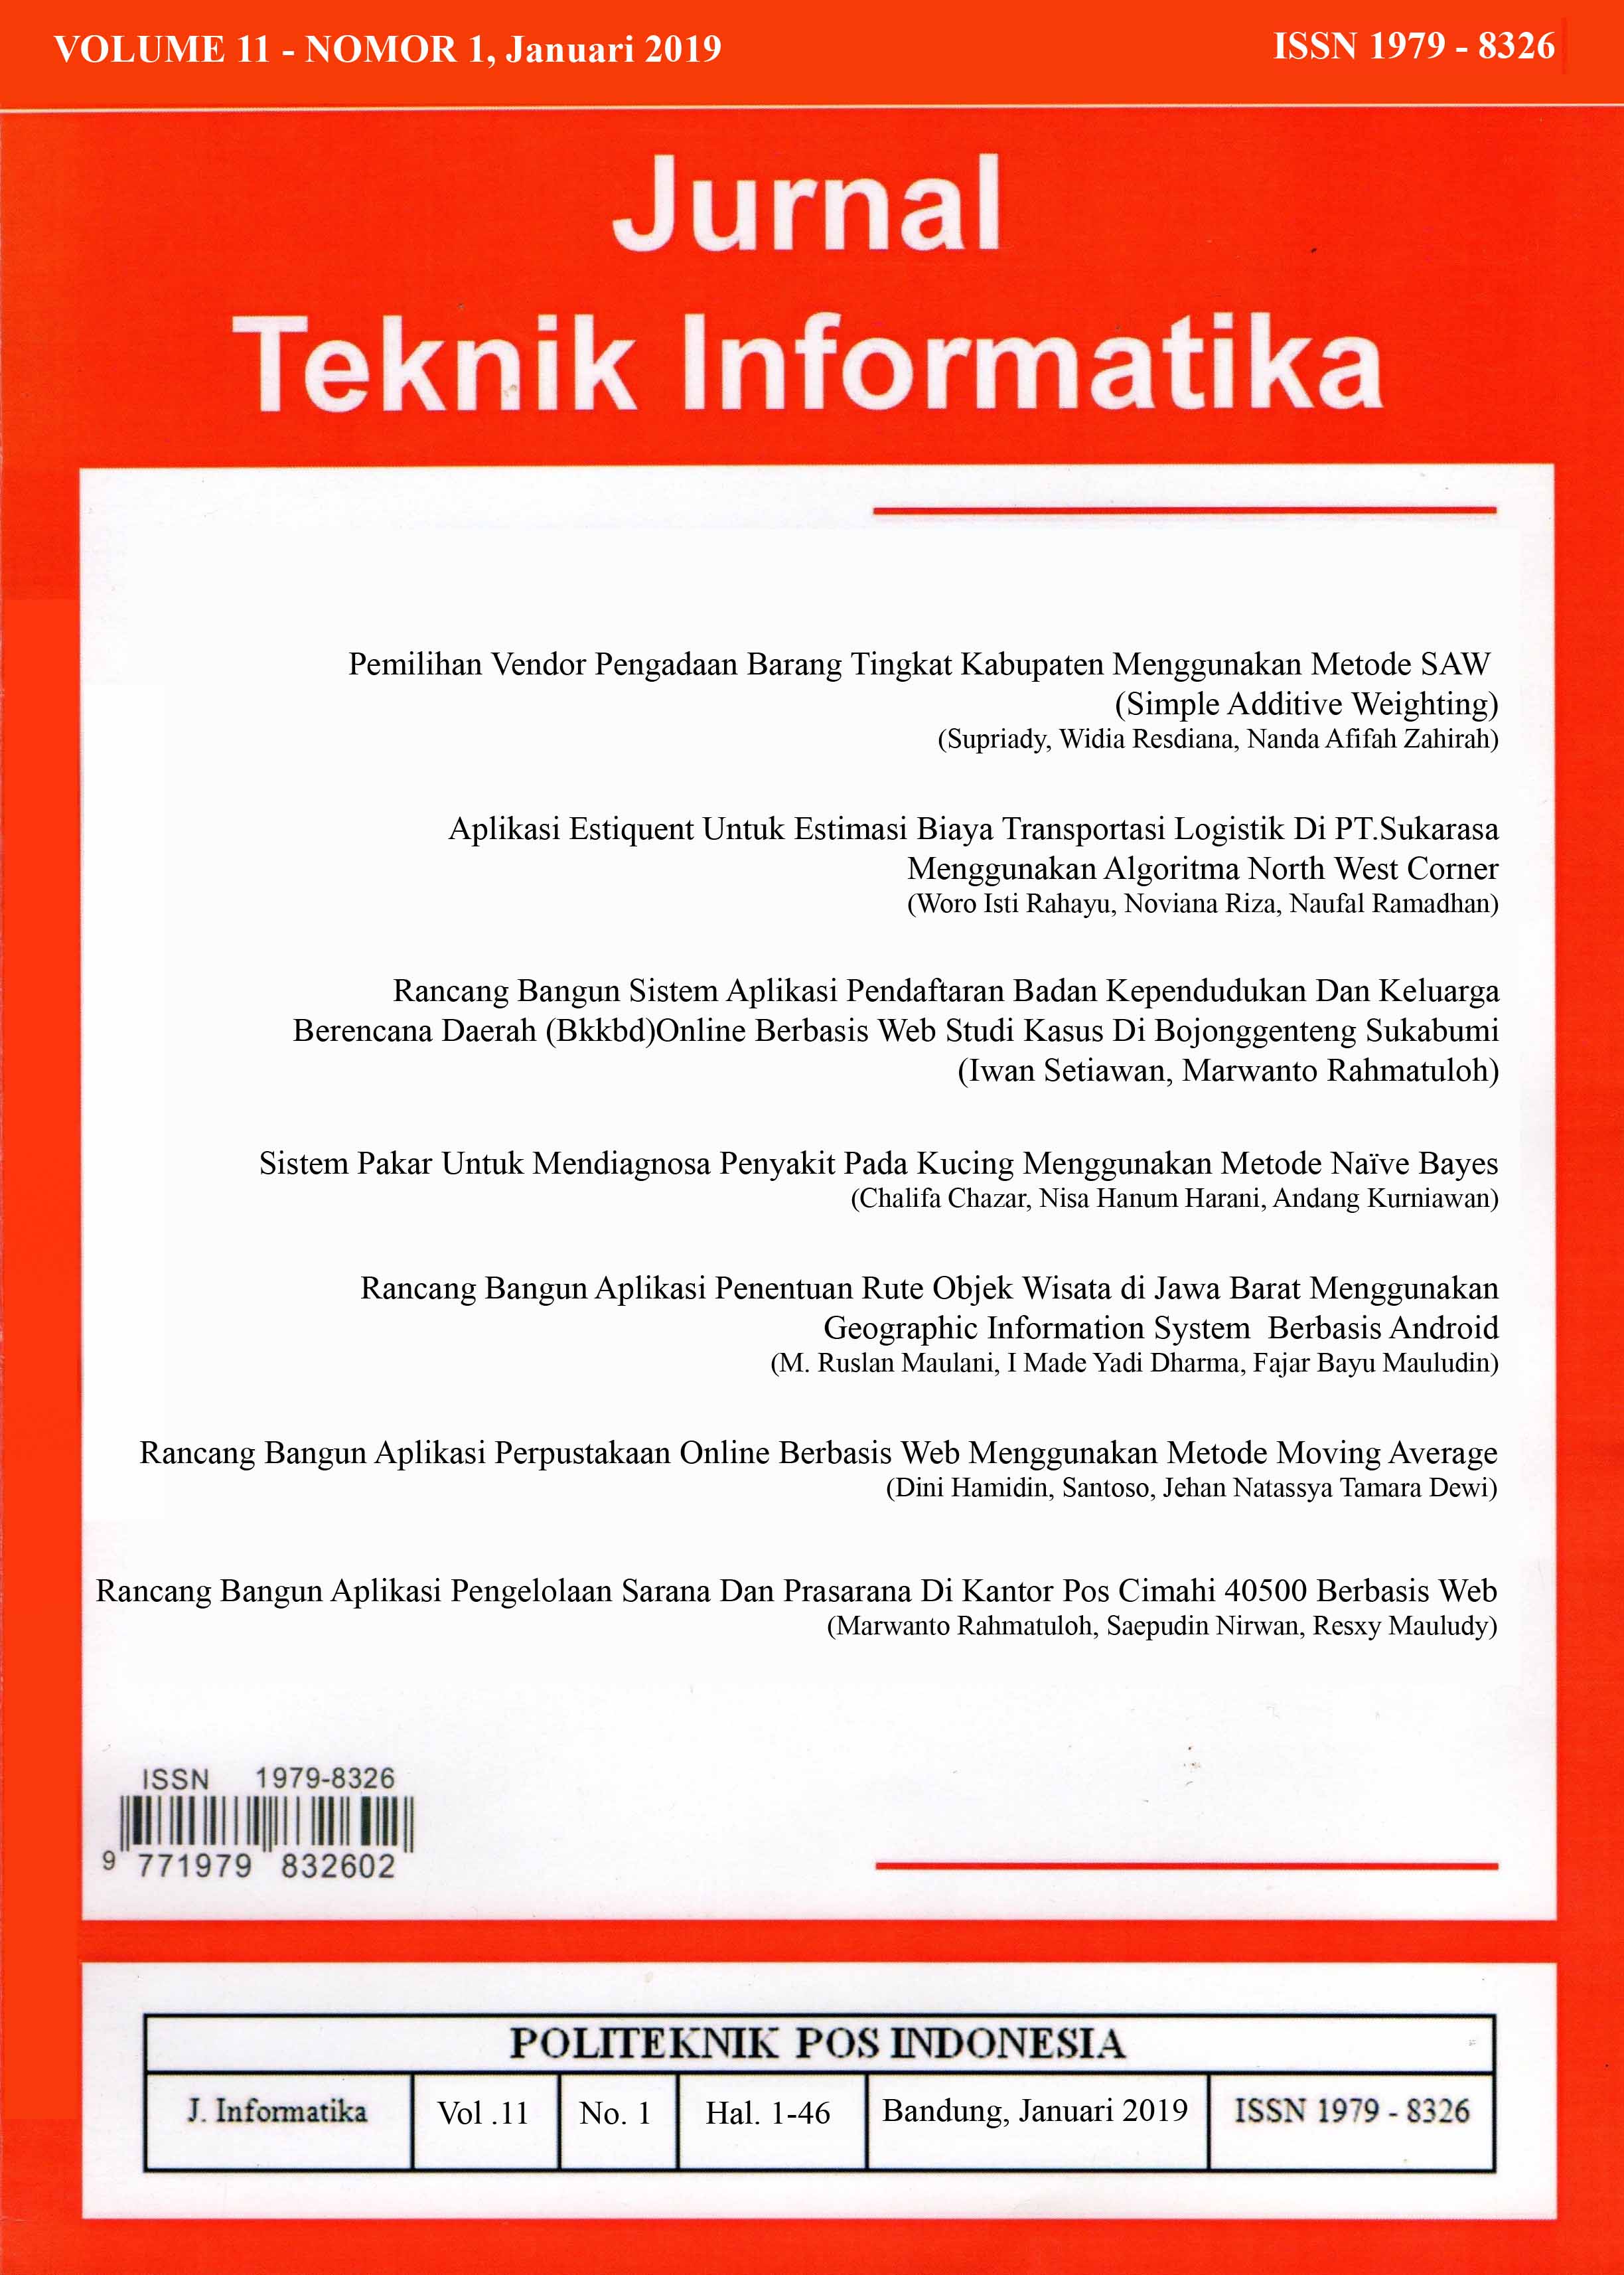 					View Vol. 10 No. 1 (2018): Jurnal Teknik Informatika Volume 10 - Nomor 1, Januari 2018
				